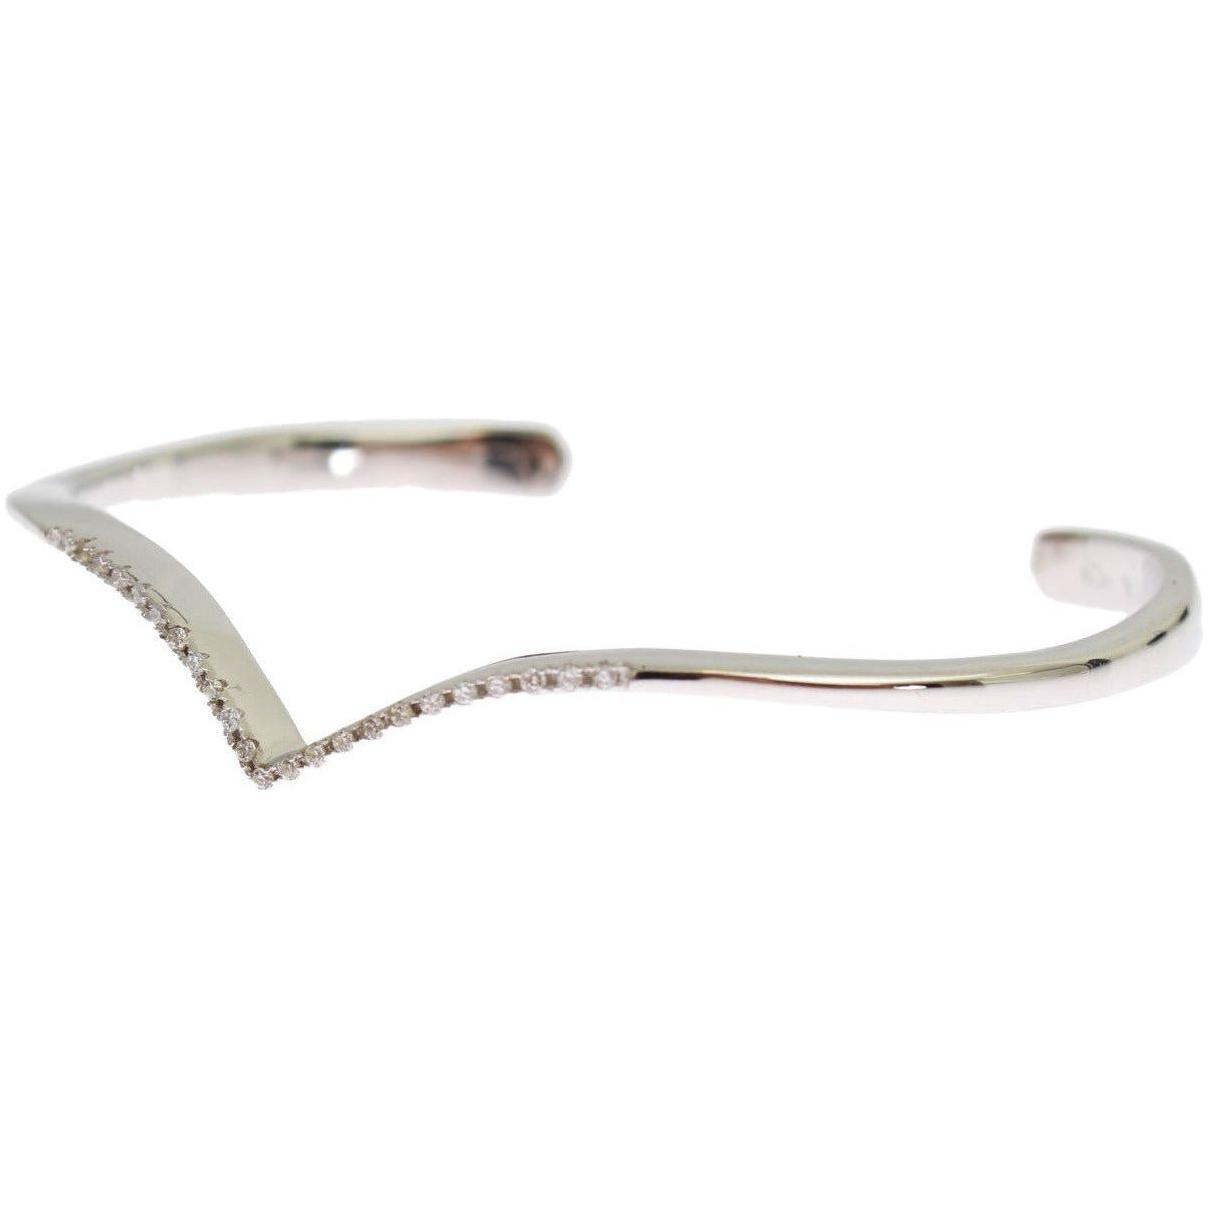 Nialaya Elegant Silver Bangle Cuff with Clear CZ Accents Bracelet skyfall-cz-925-silver-bangle-bracelet